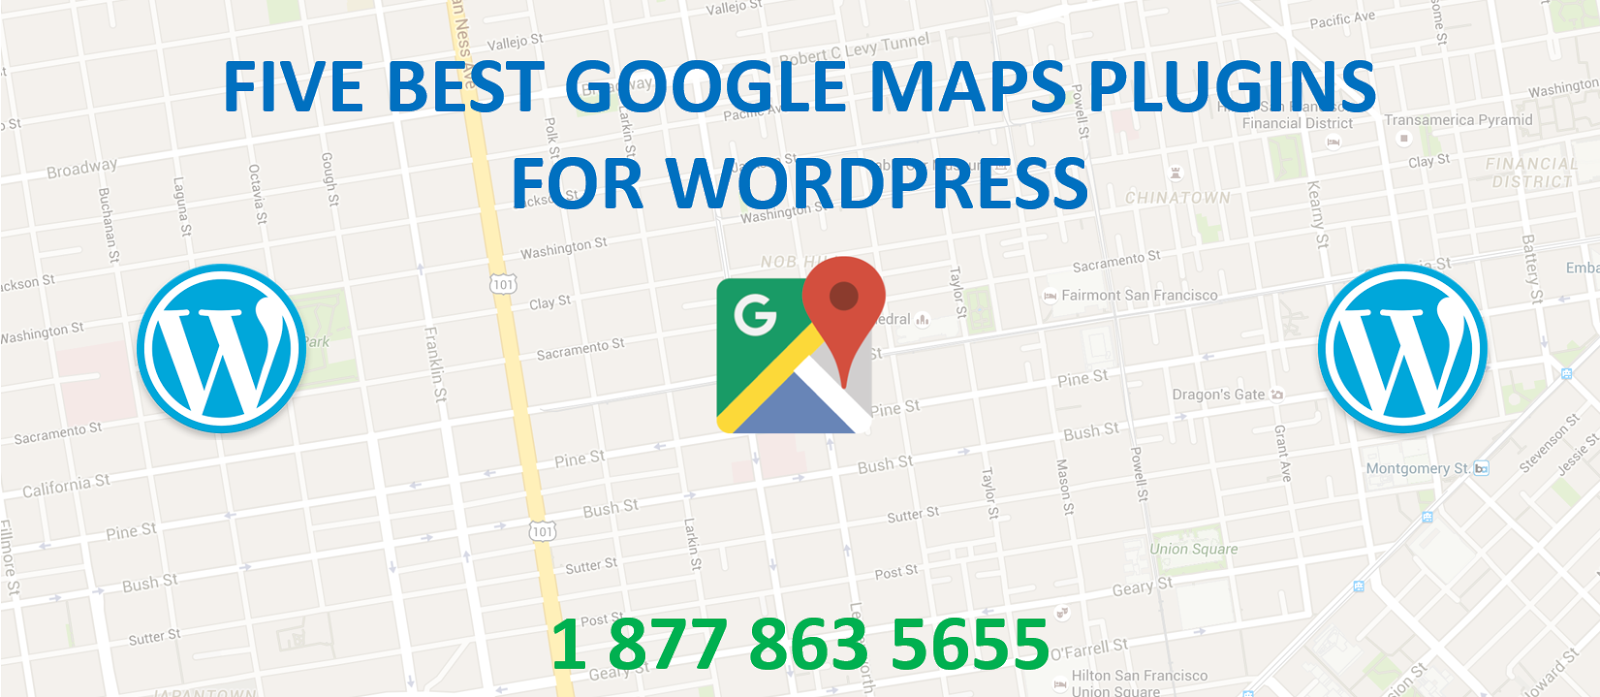 Five Best Google Maps Plugins For WordPress